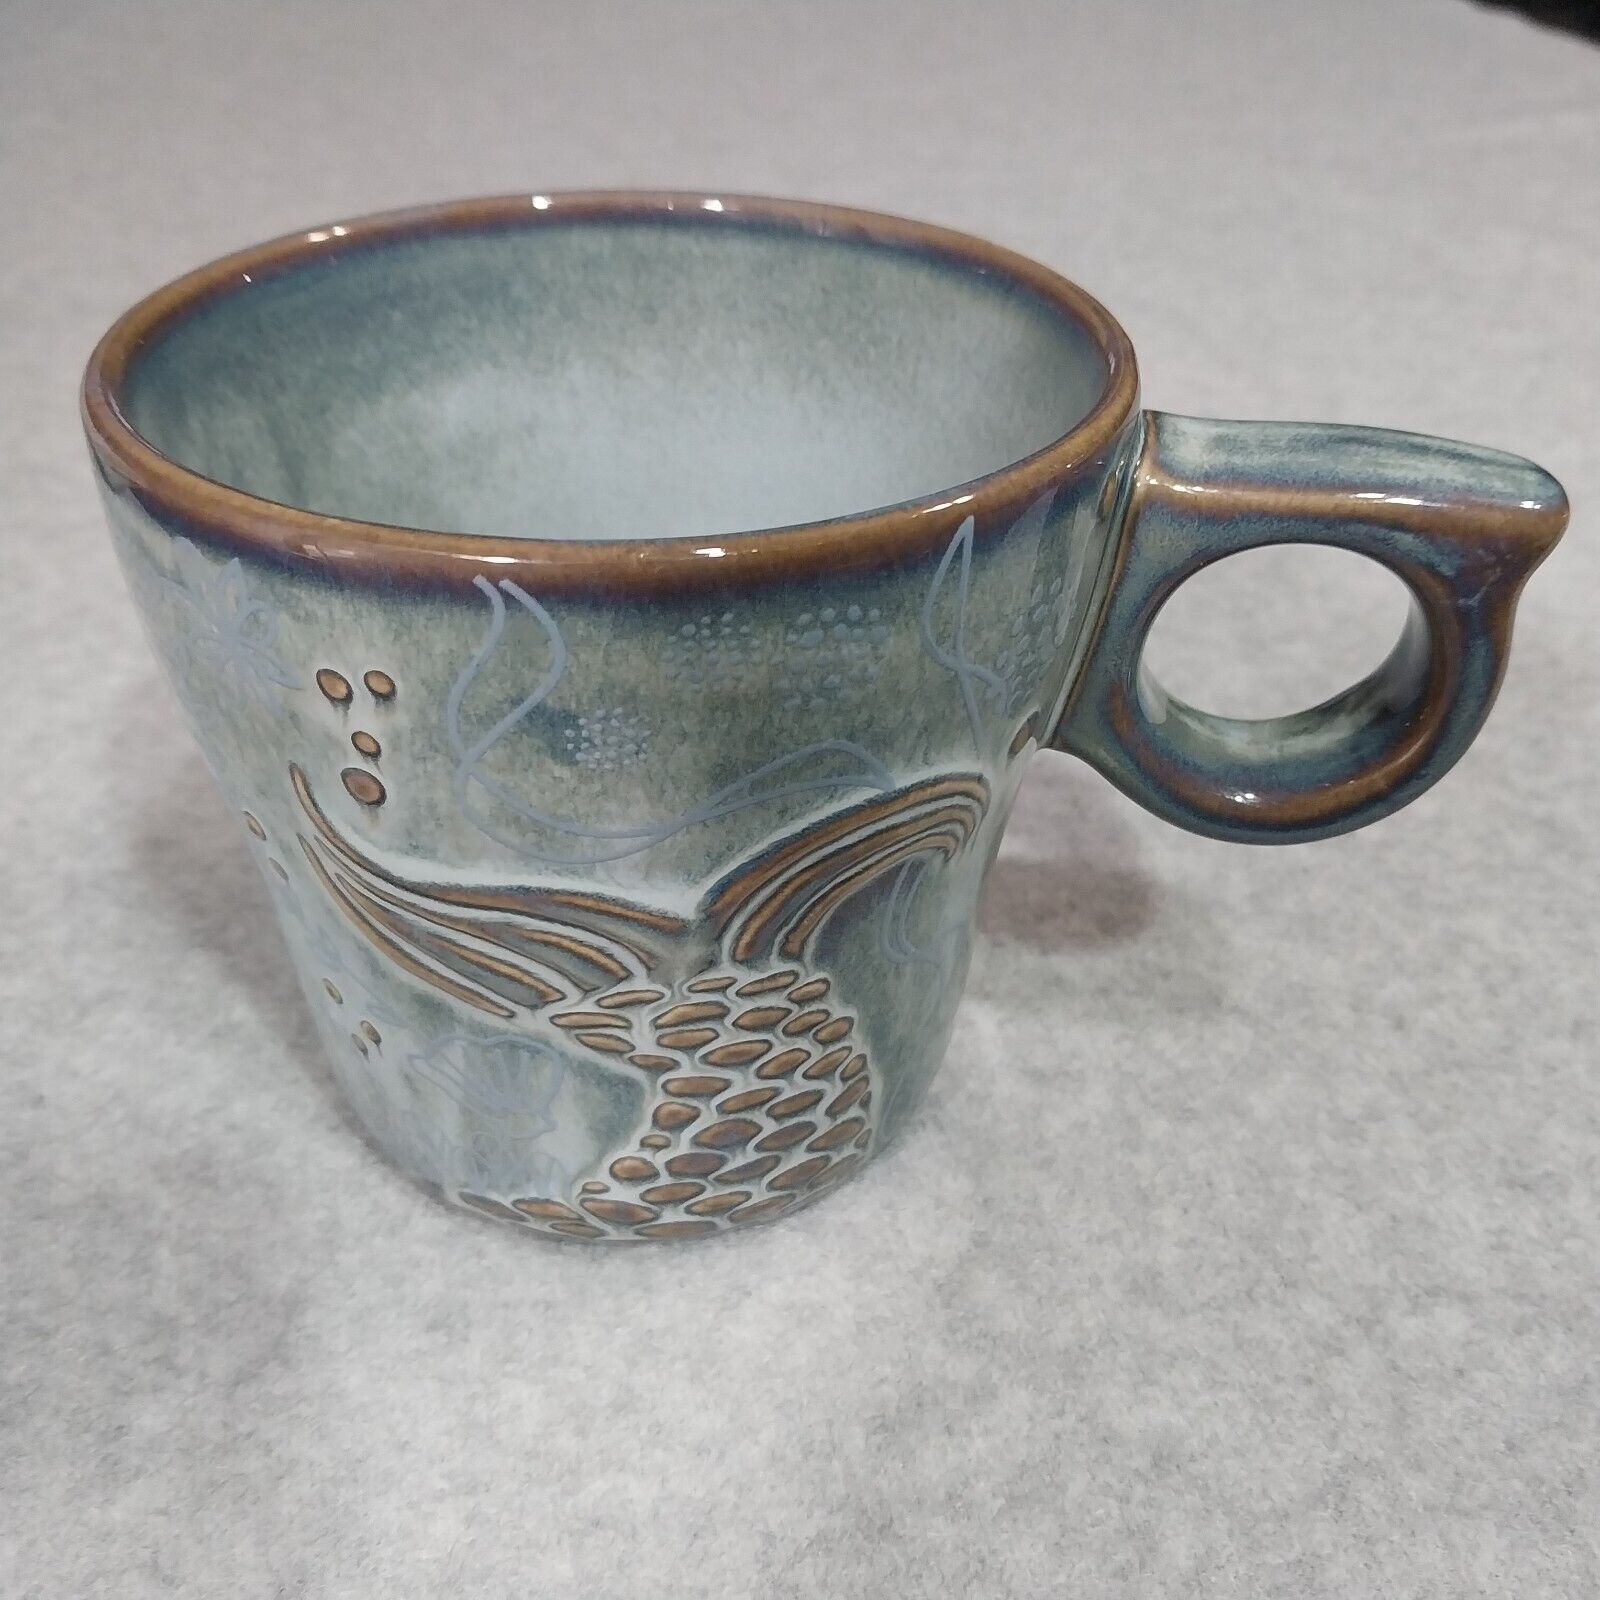 Starbucks Siren Mermaid Tail Coffee Mug 2014 Anniversary Collection 12 Oz Cup